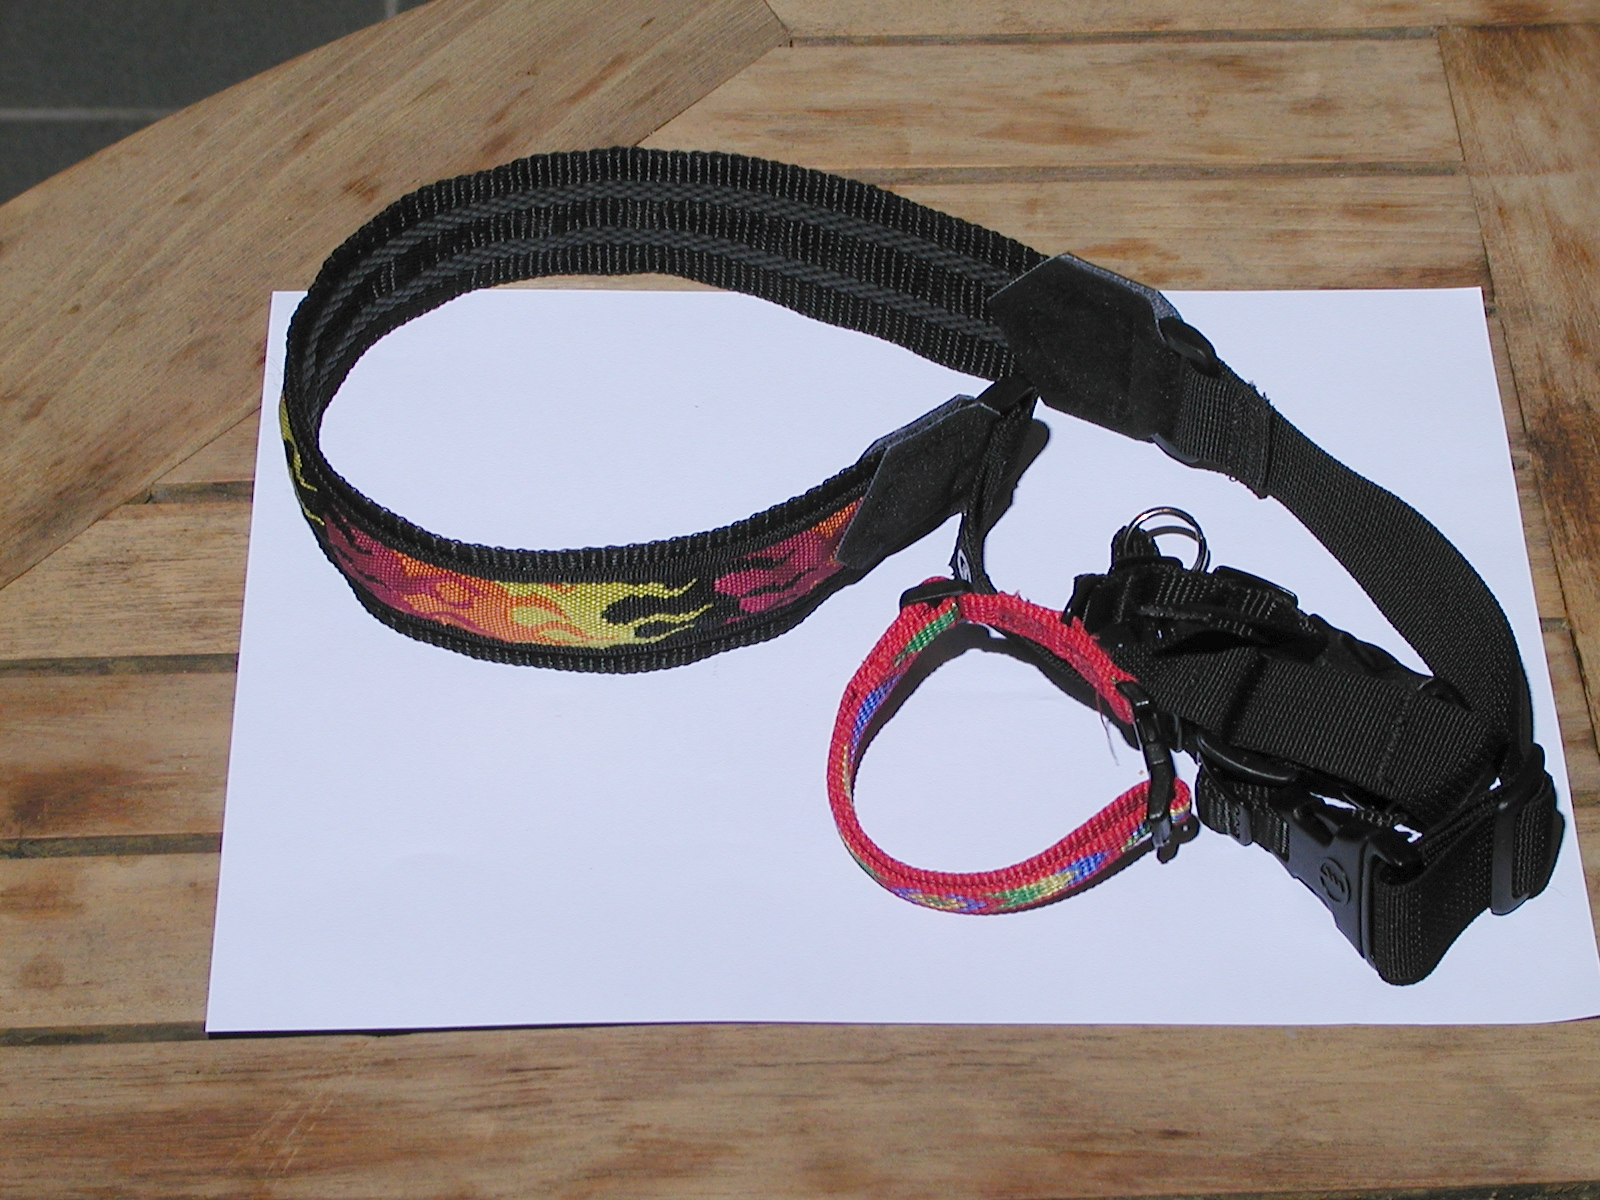 Tamrac N-17 strap with dog collar to attach to flash bracket